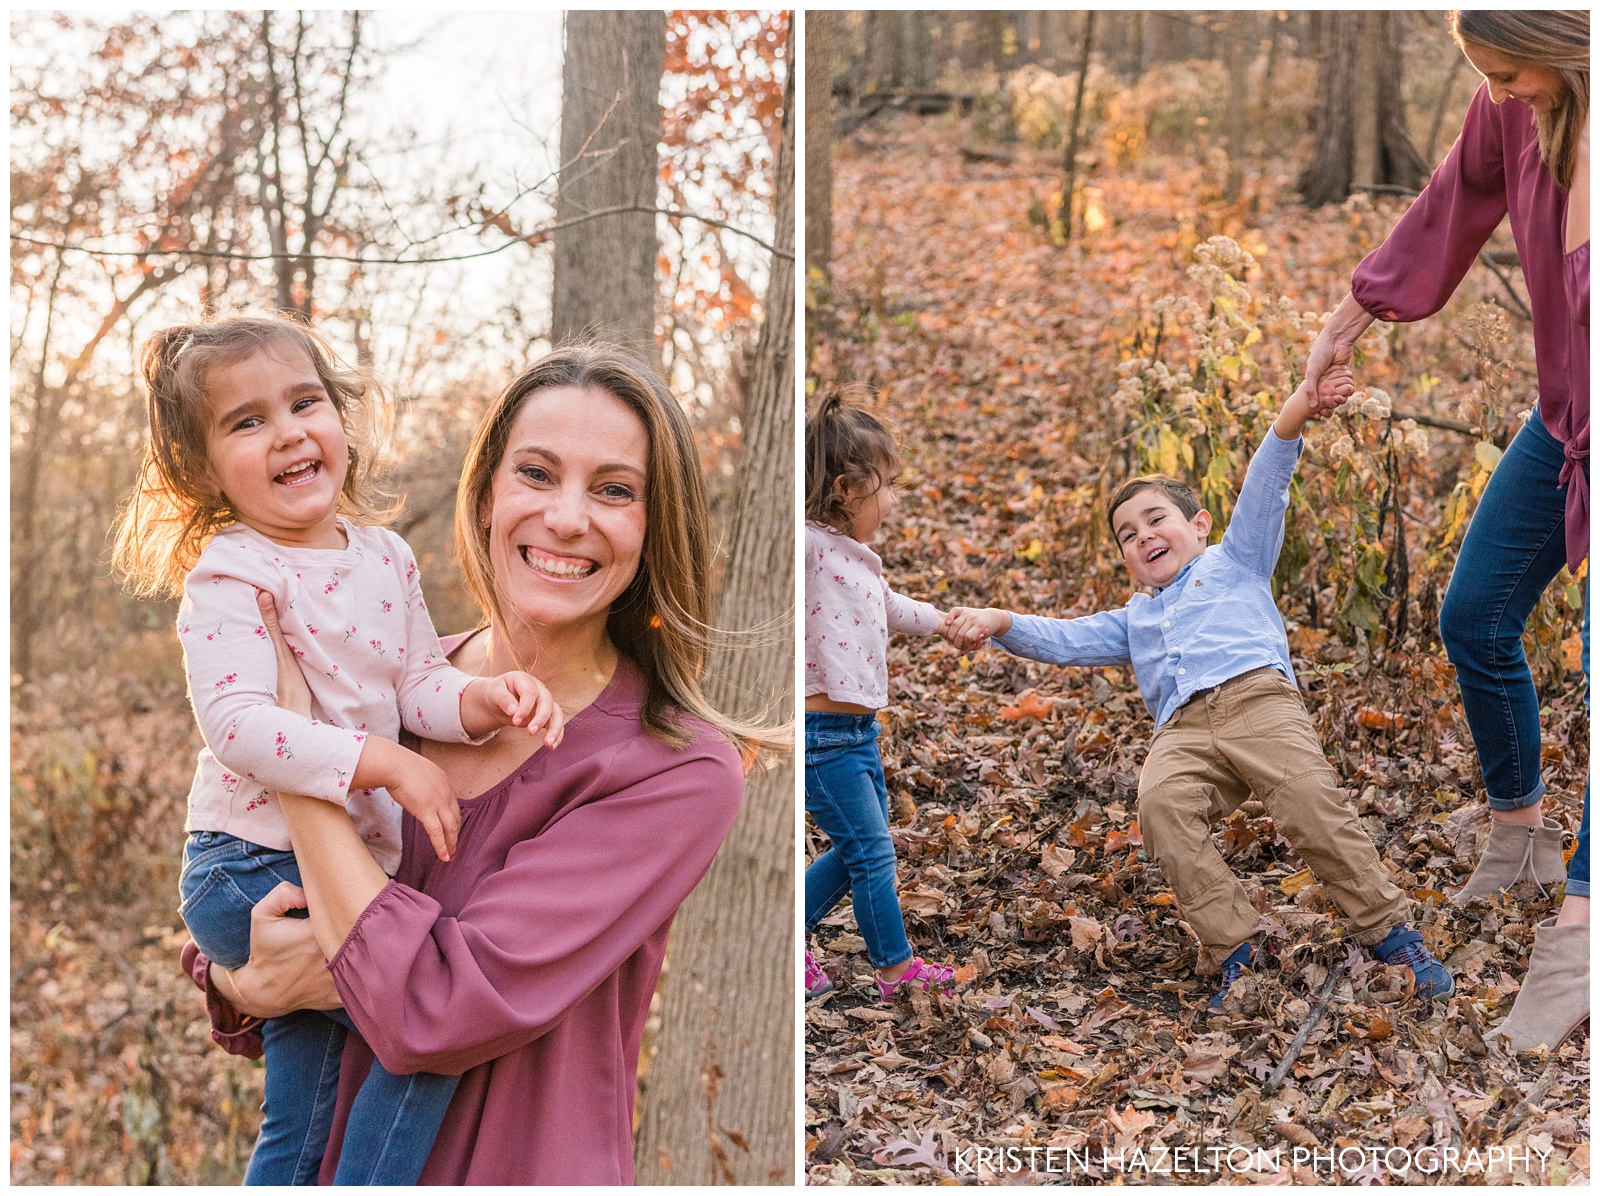 Candid family portraits by natural light photographer Kristen Hazelton